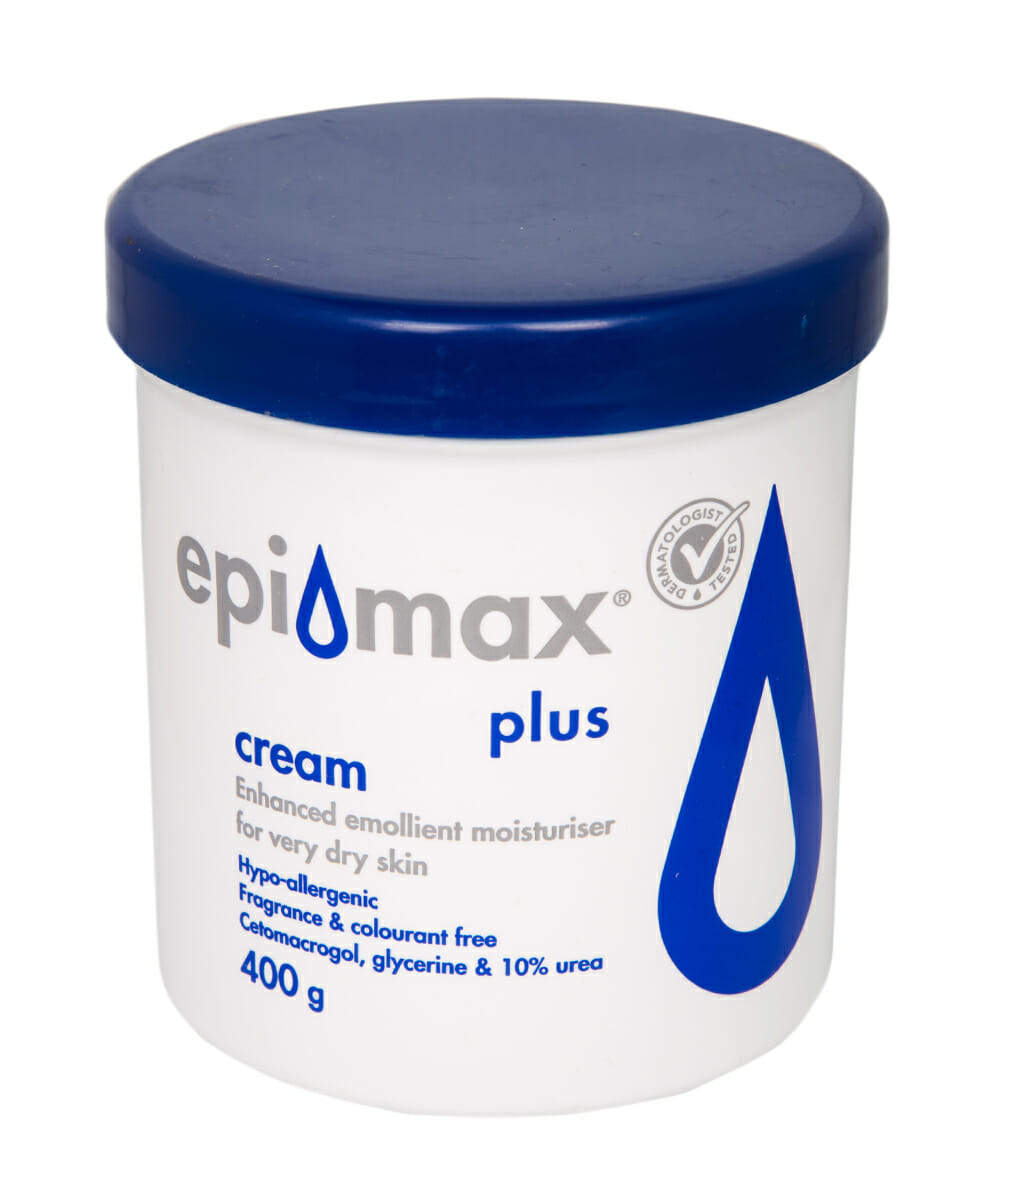 Epimax-plus-enhanced-moisturiser